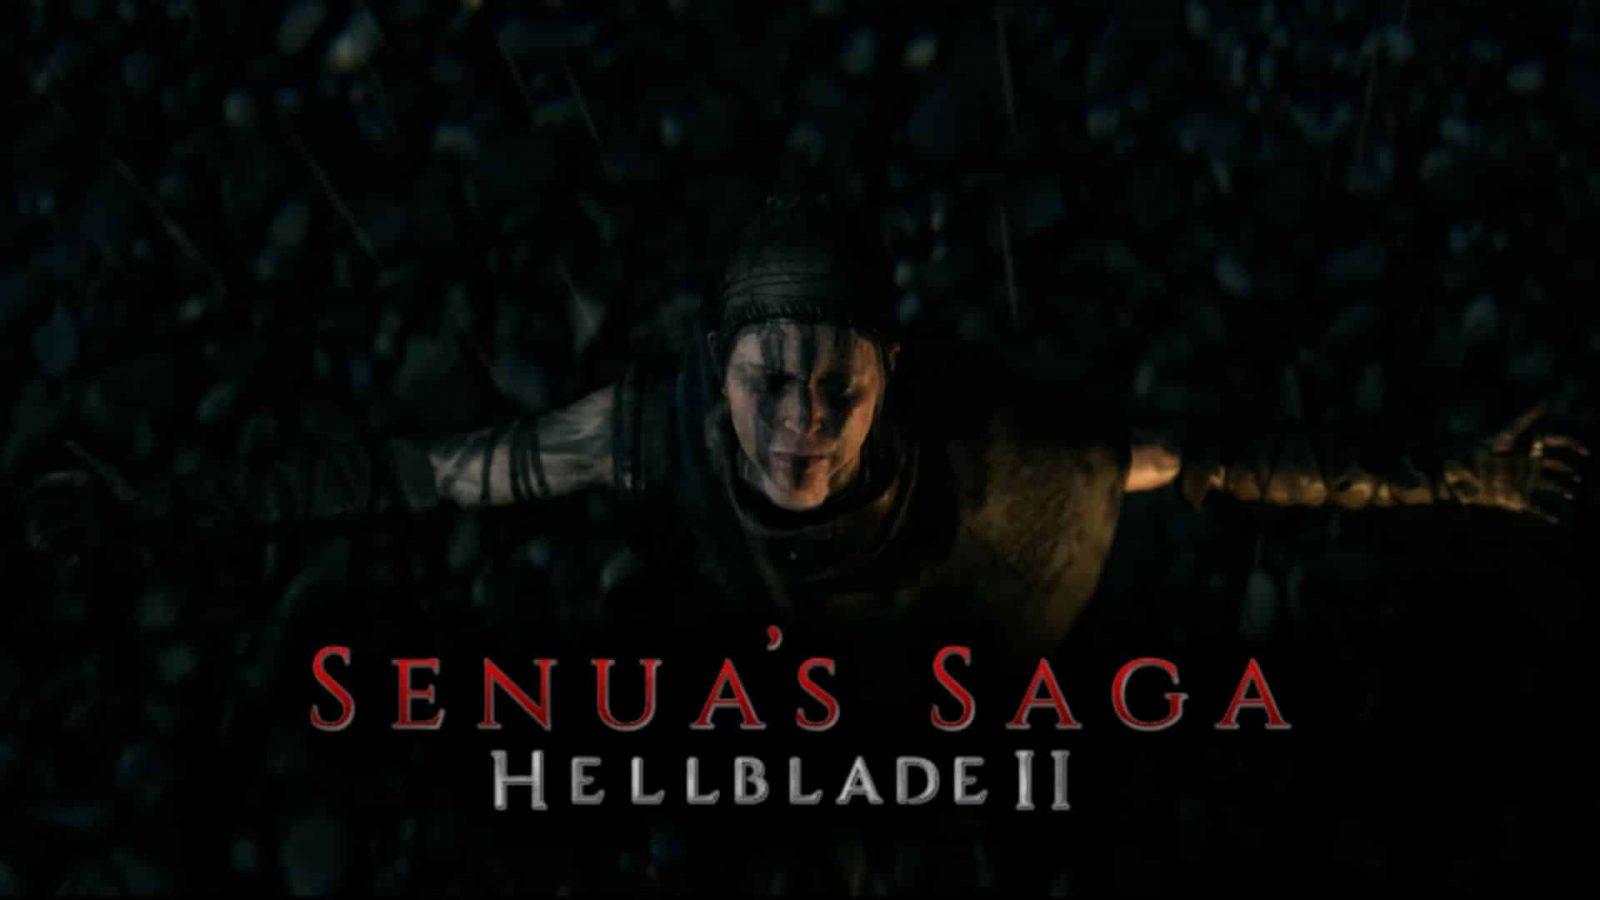 Senua's Saga: Hellblade 2 is looking great in this new trailer